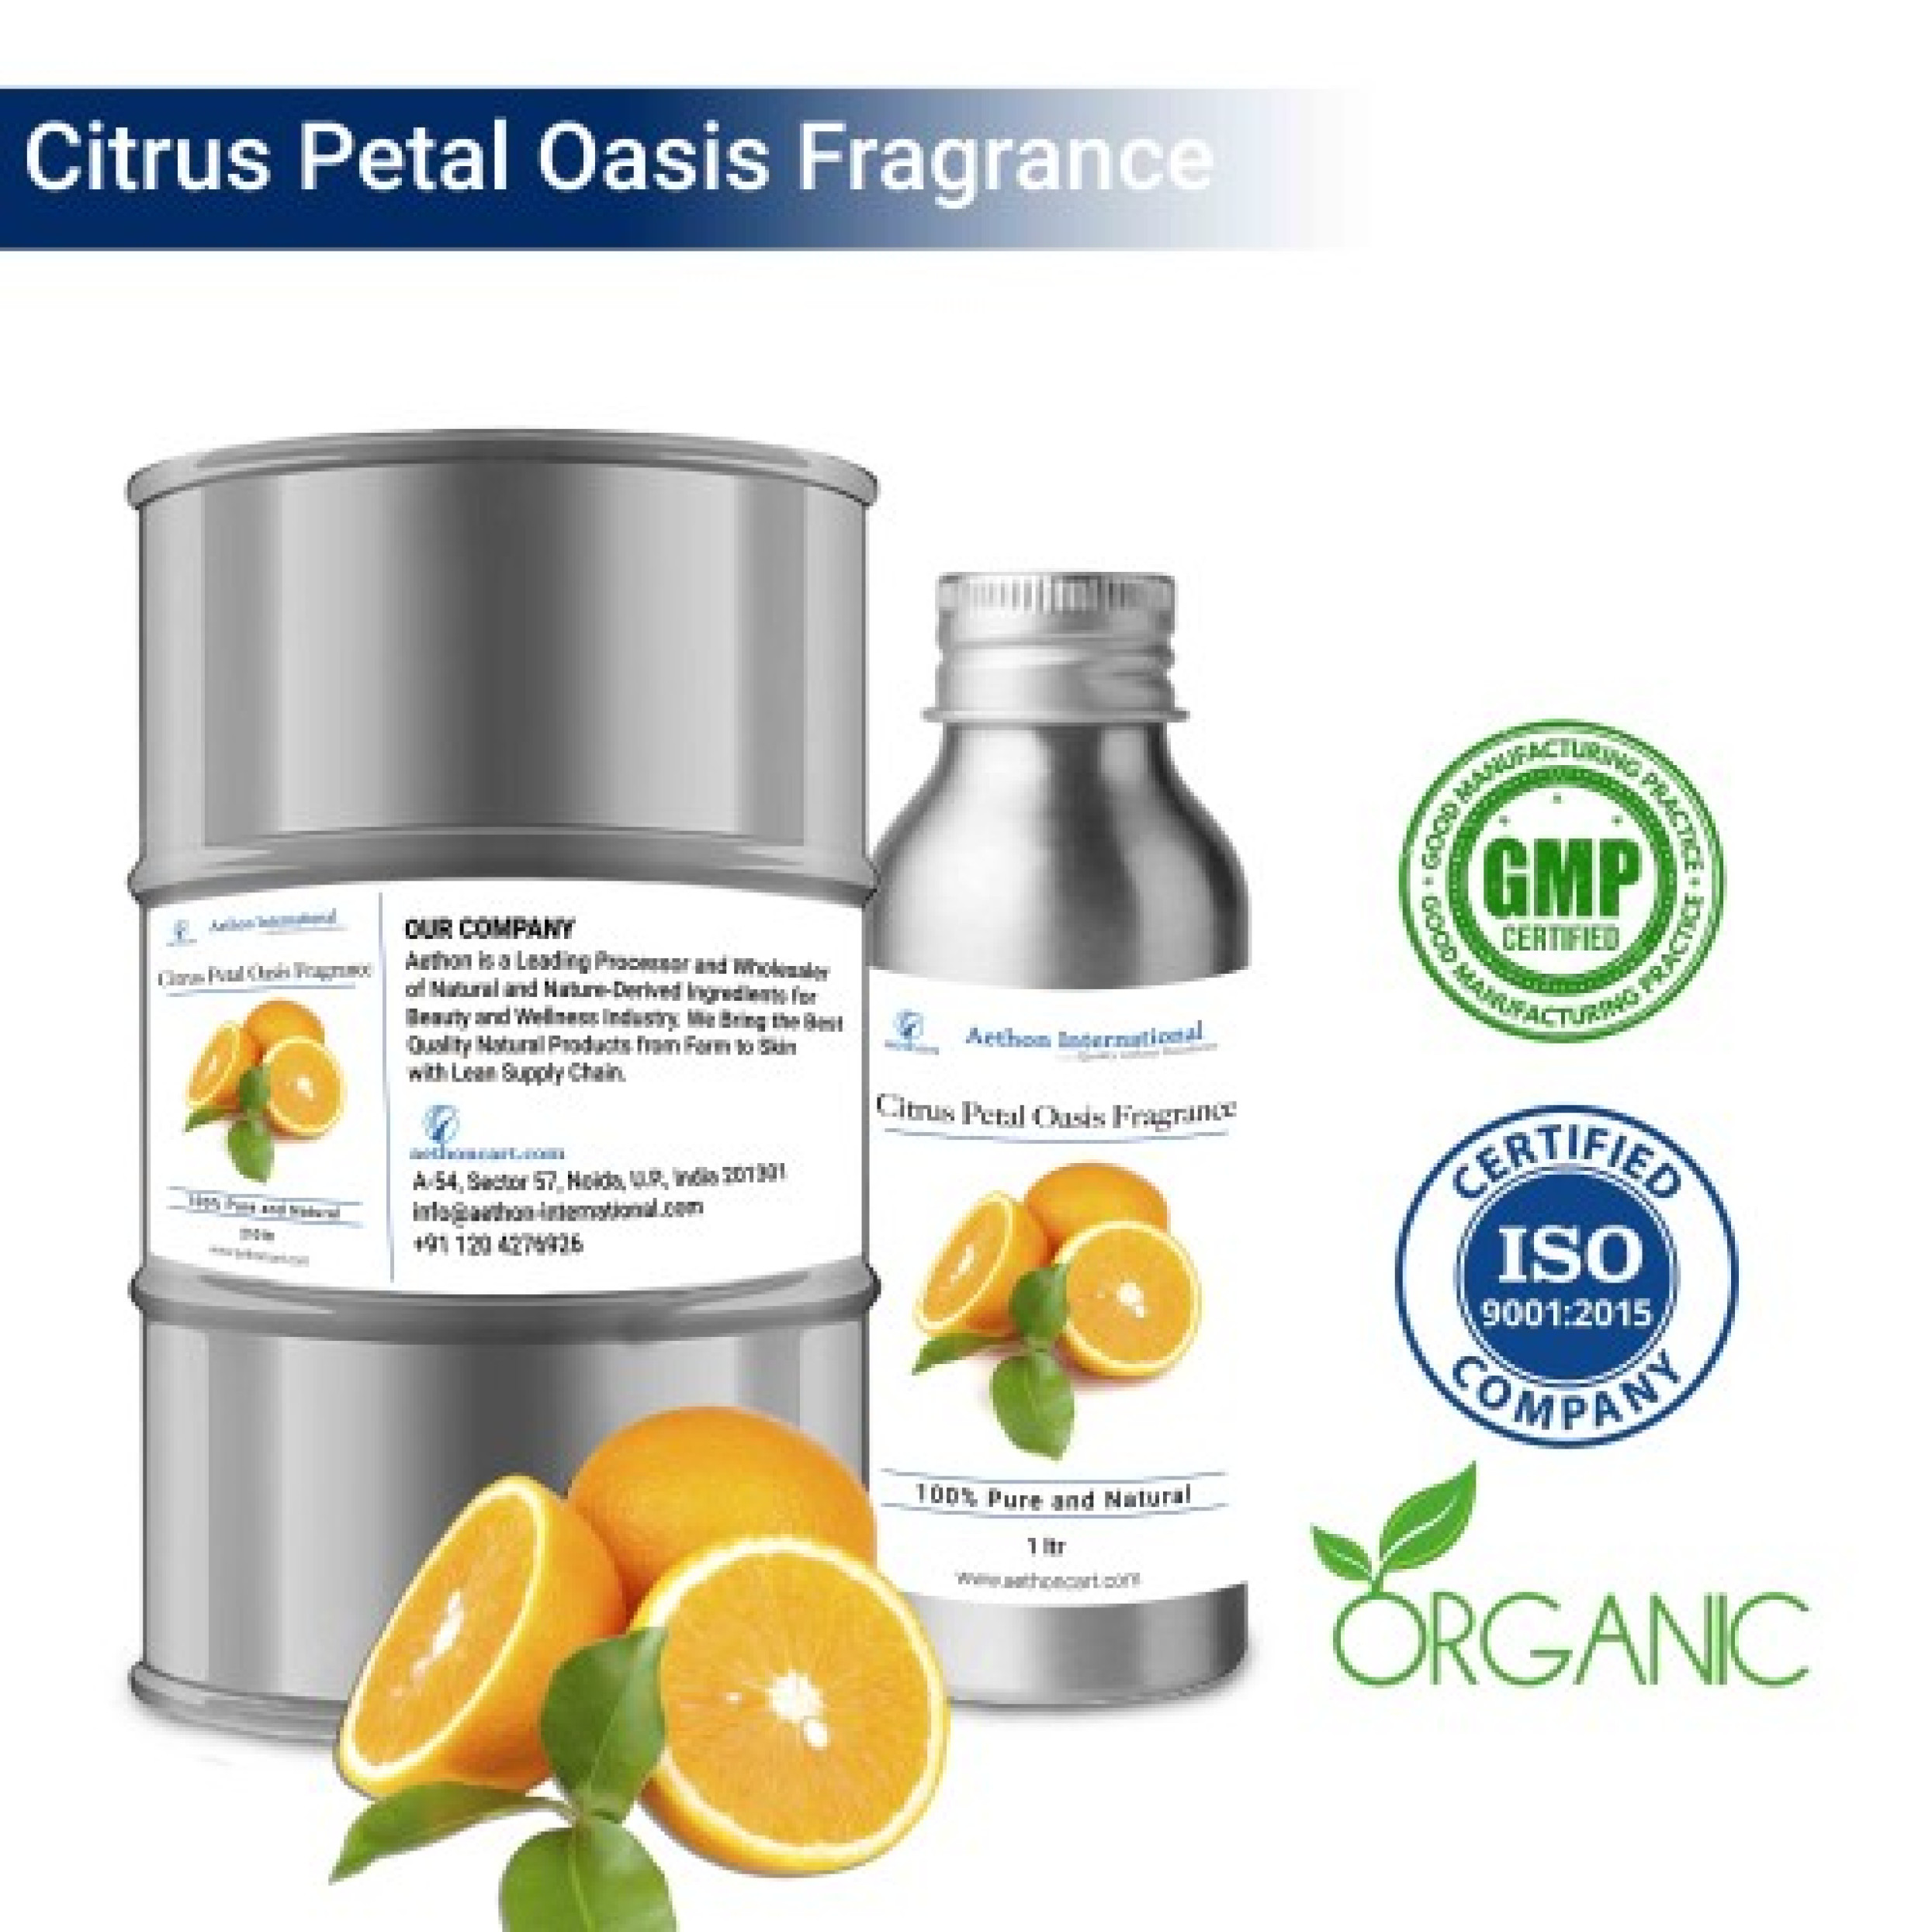 Citrus Petal Oasis Fragrance